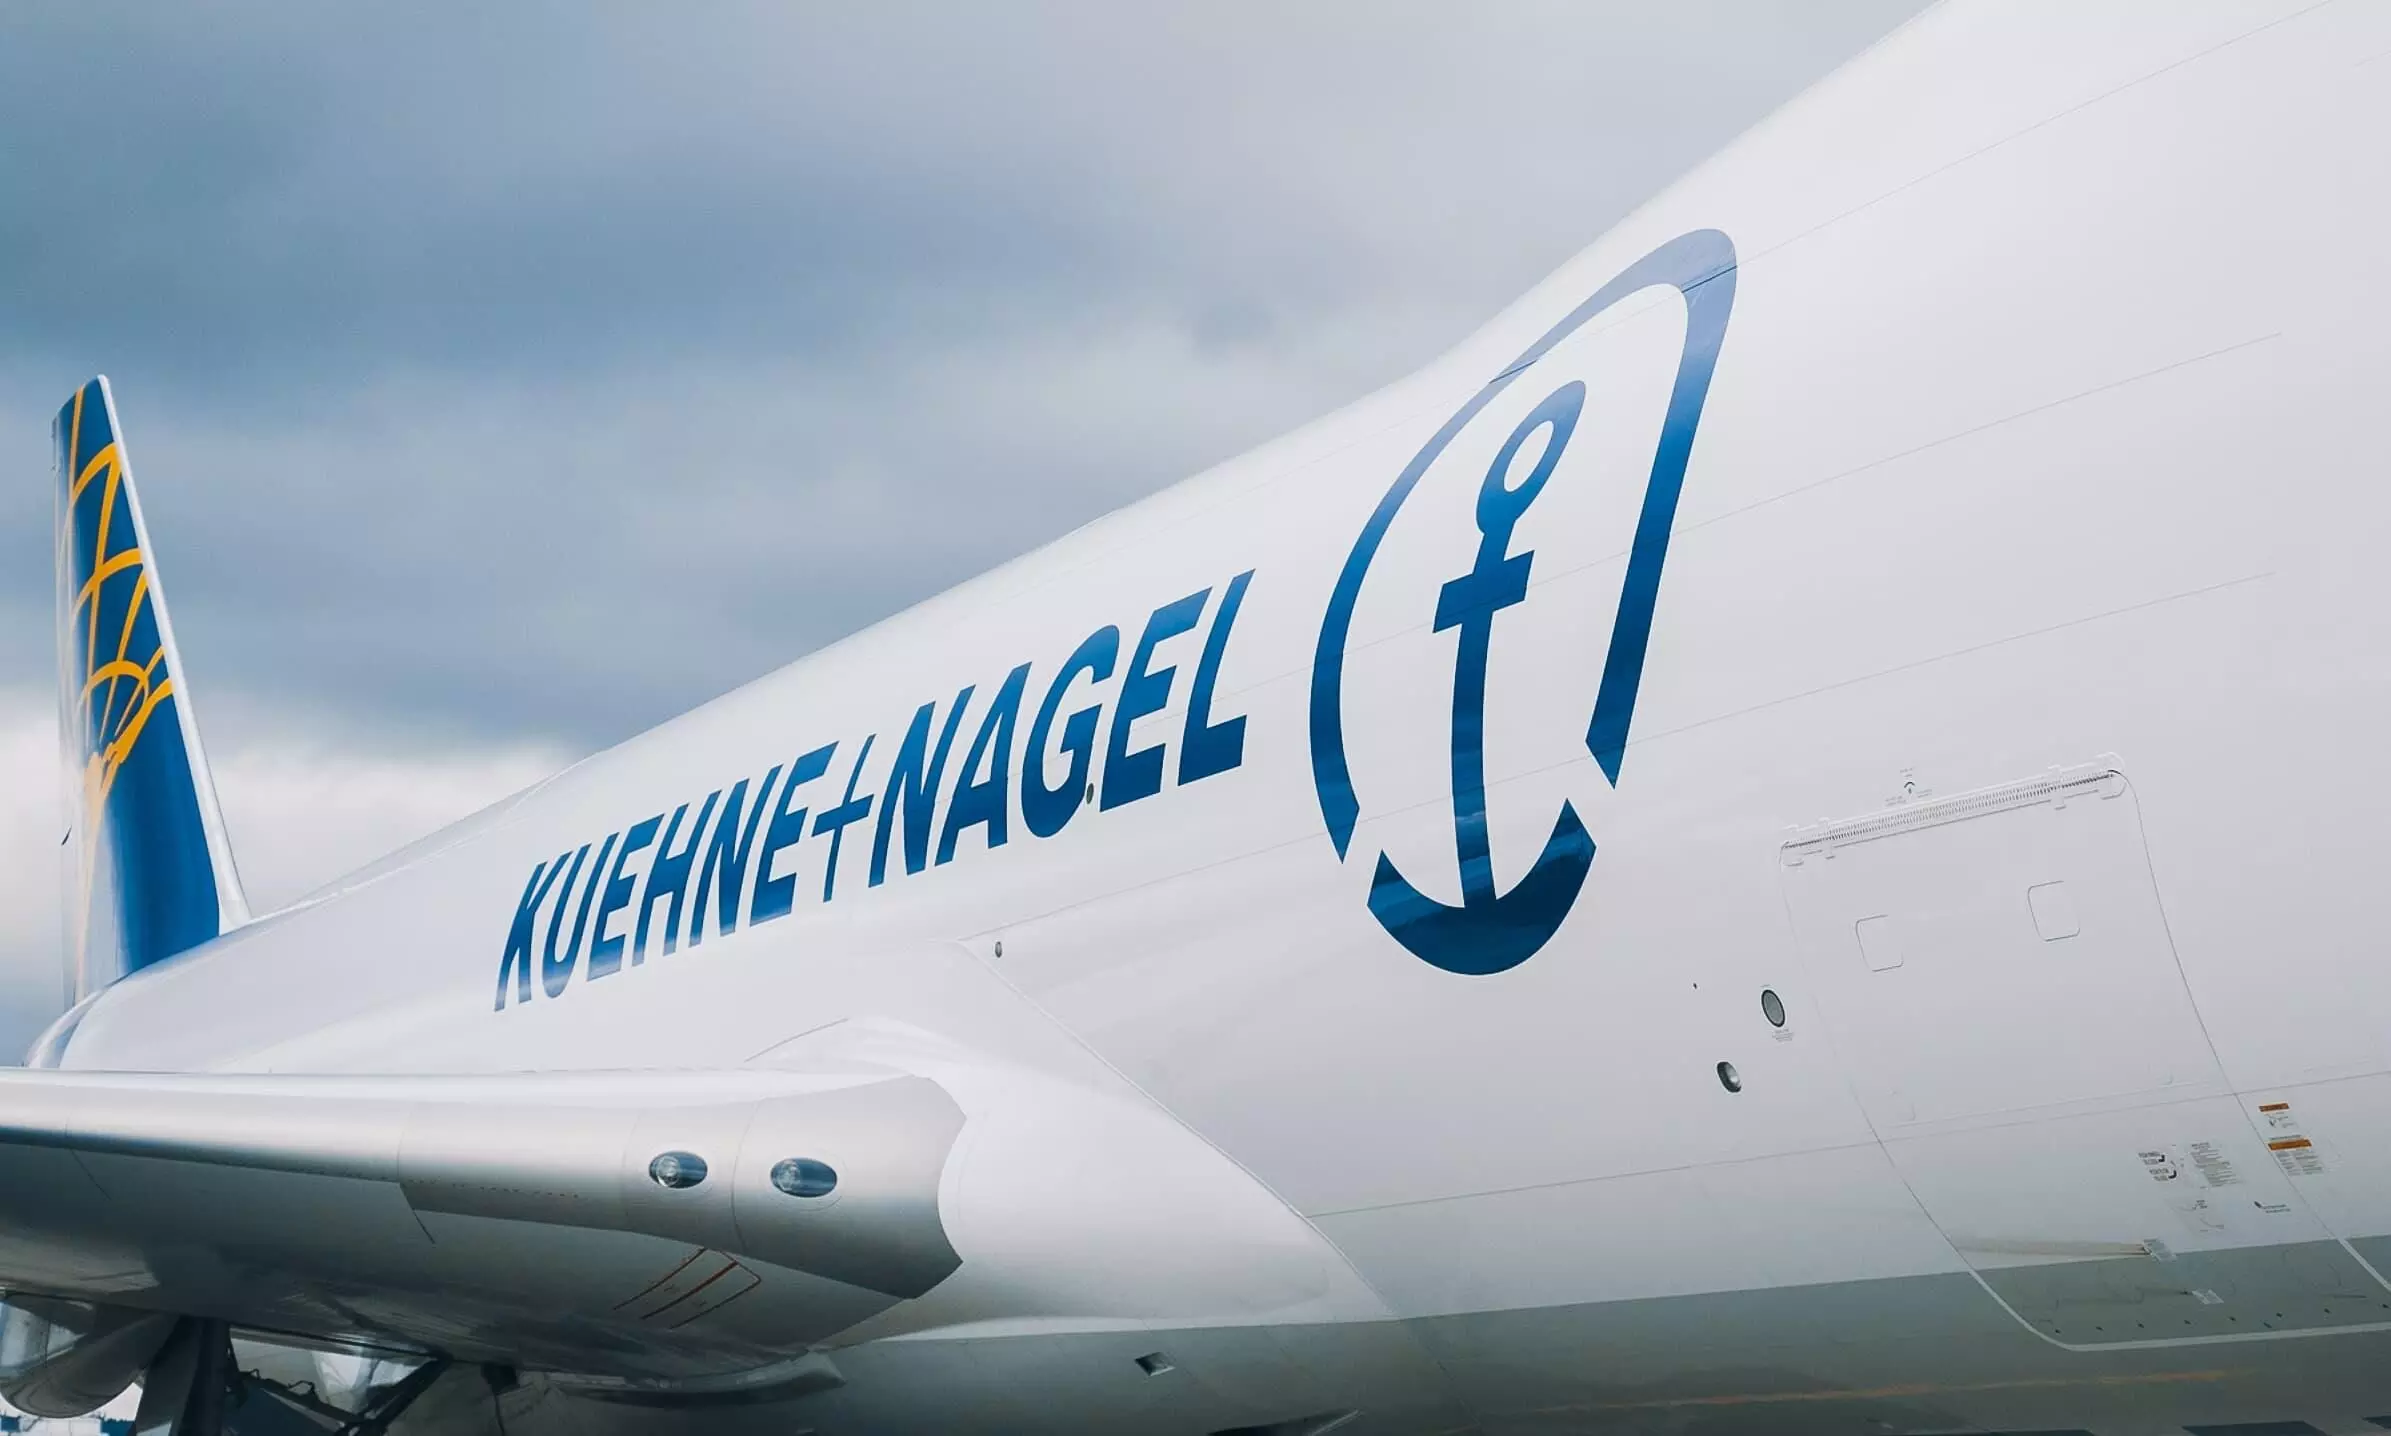 Kuehne+Nagel Q1 earnings decline 45%